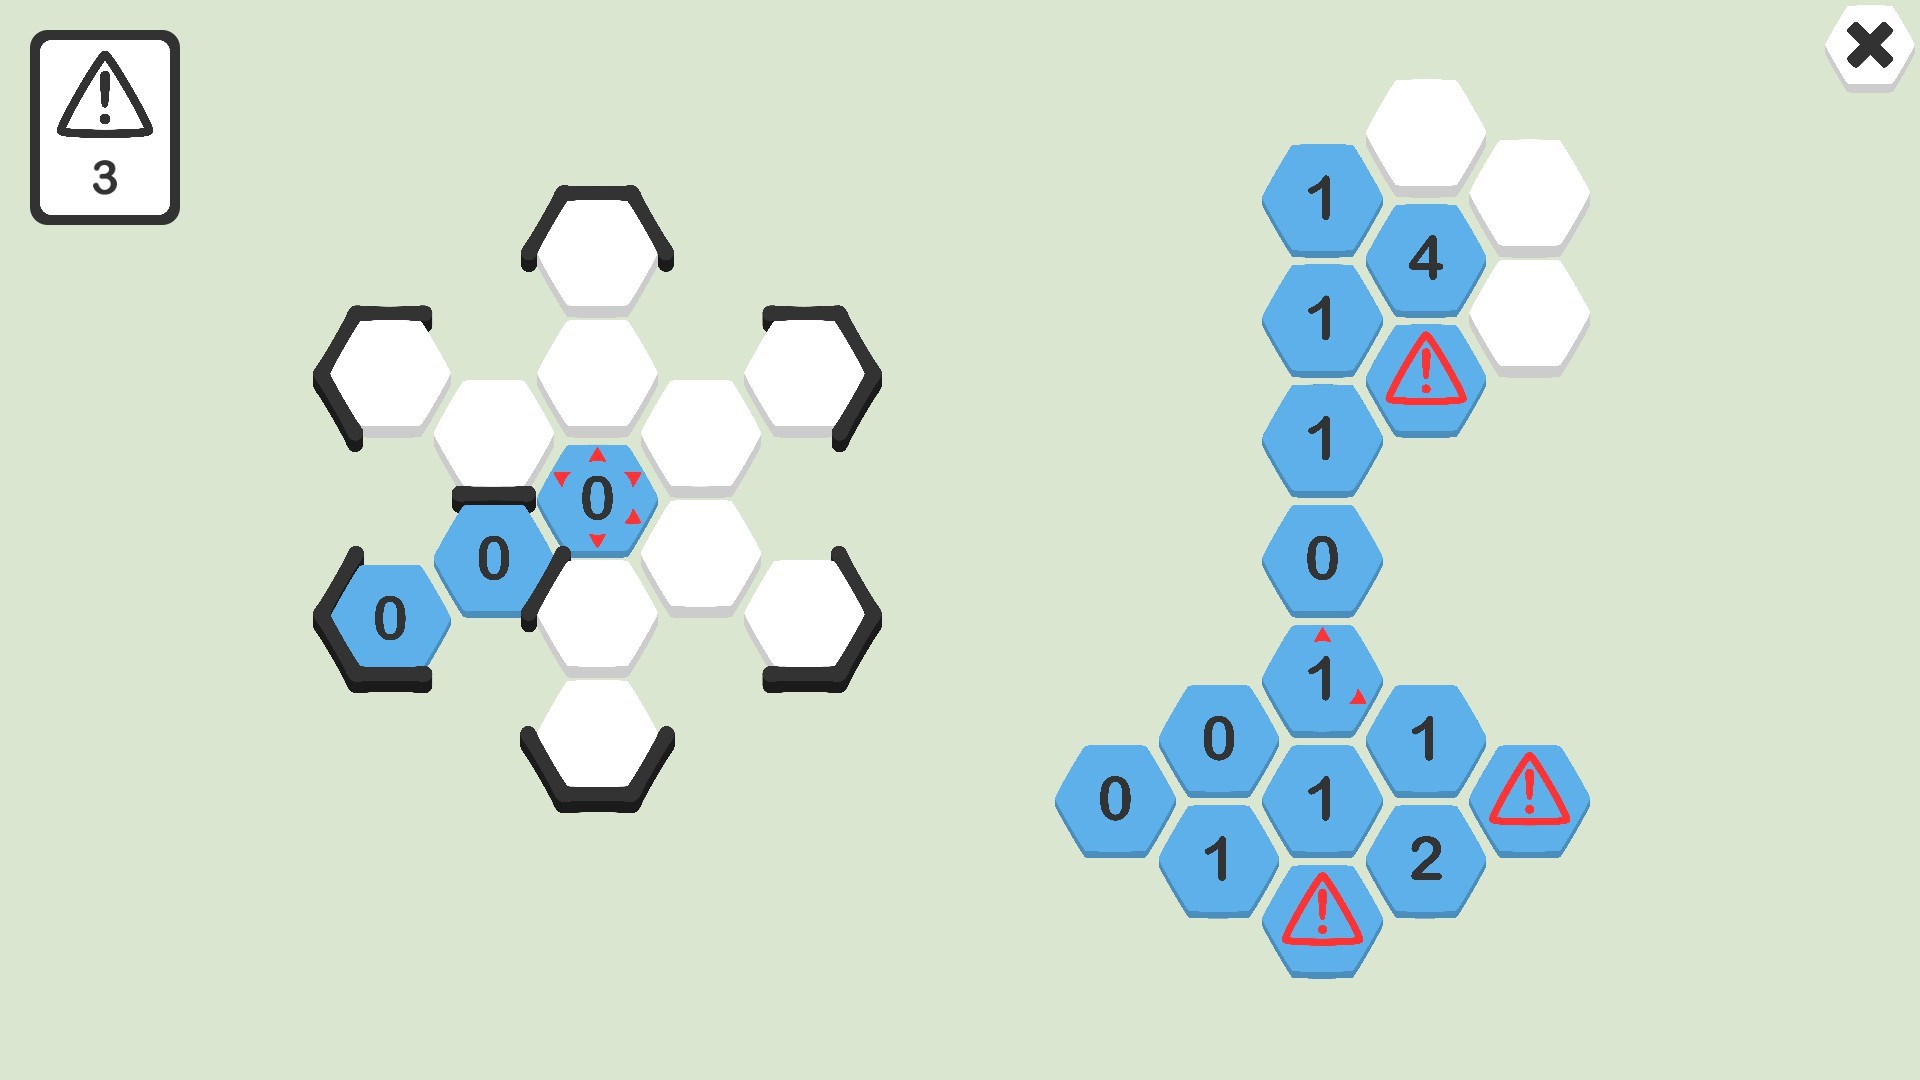 Hexagon puzzle on Steam